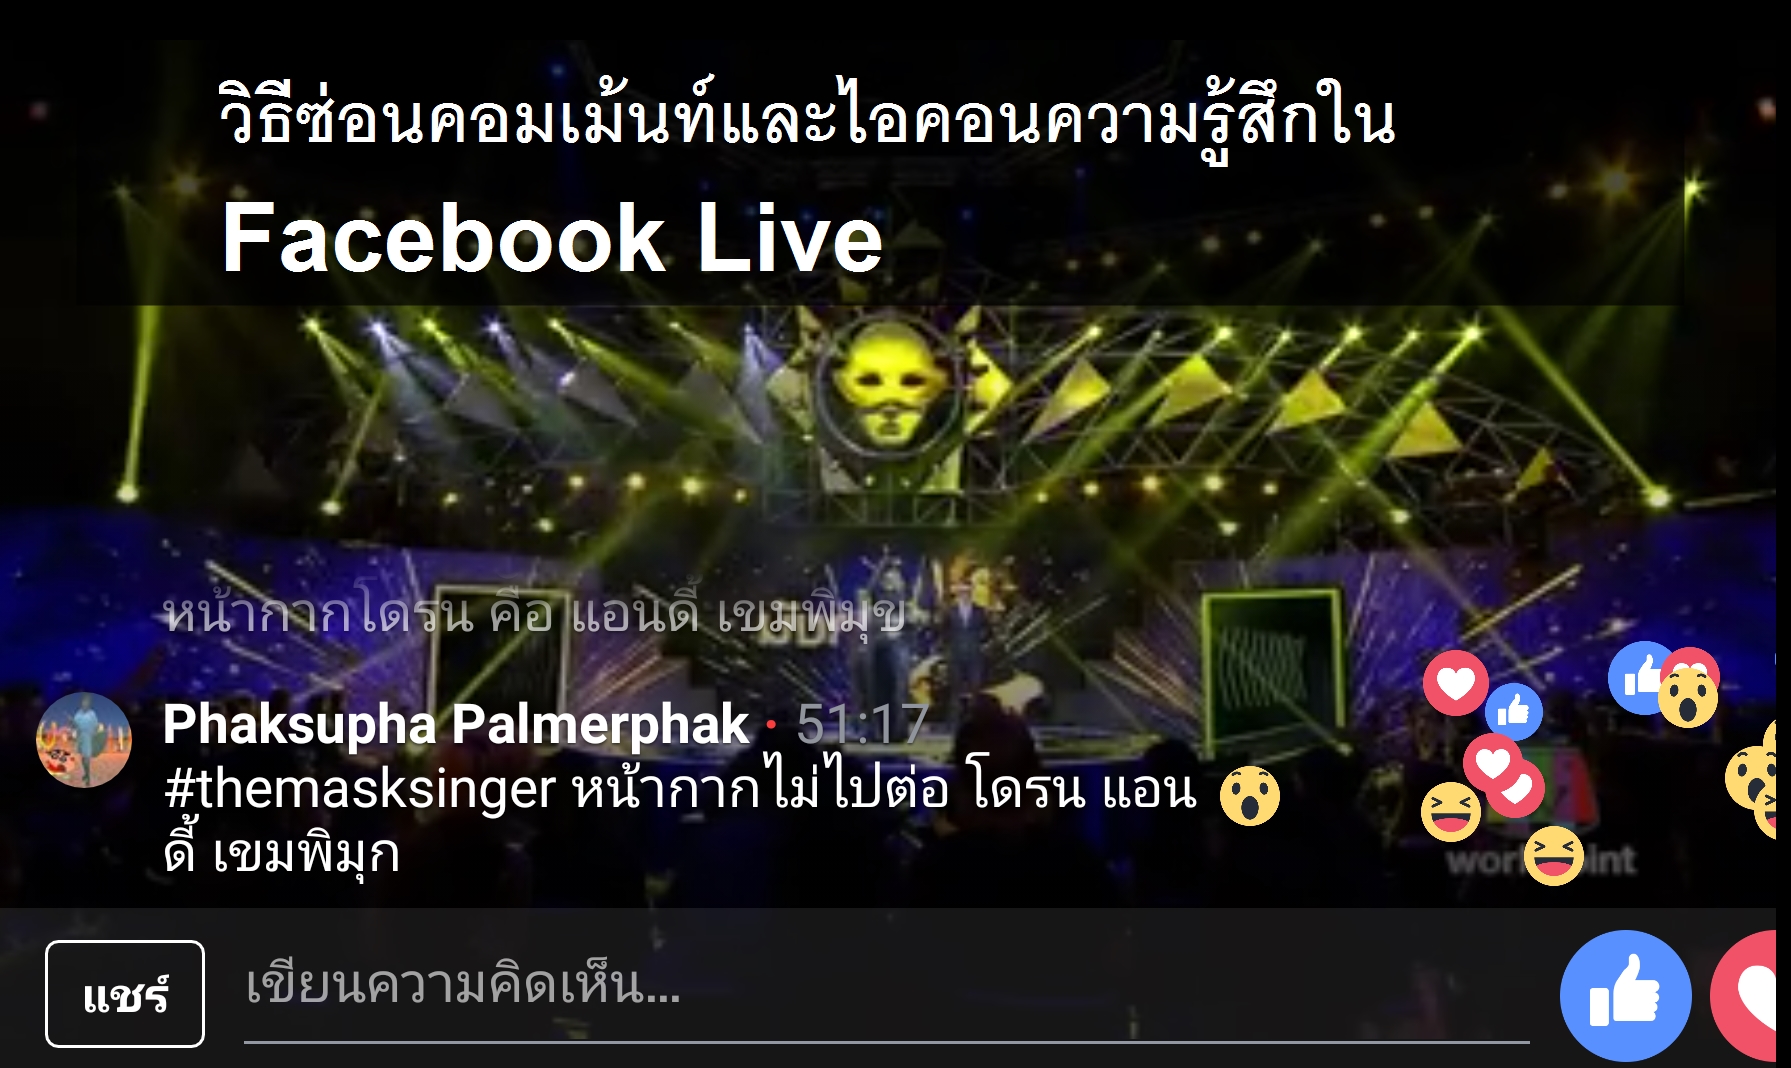 003 | facebook live | [TIP] รกหูรกตา?! วิธีซ่อนคอมเม้นท์และไอคอนความรู้สึกใน Facebook Live